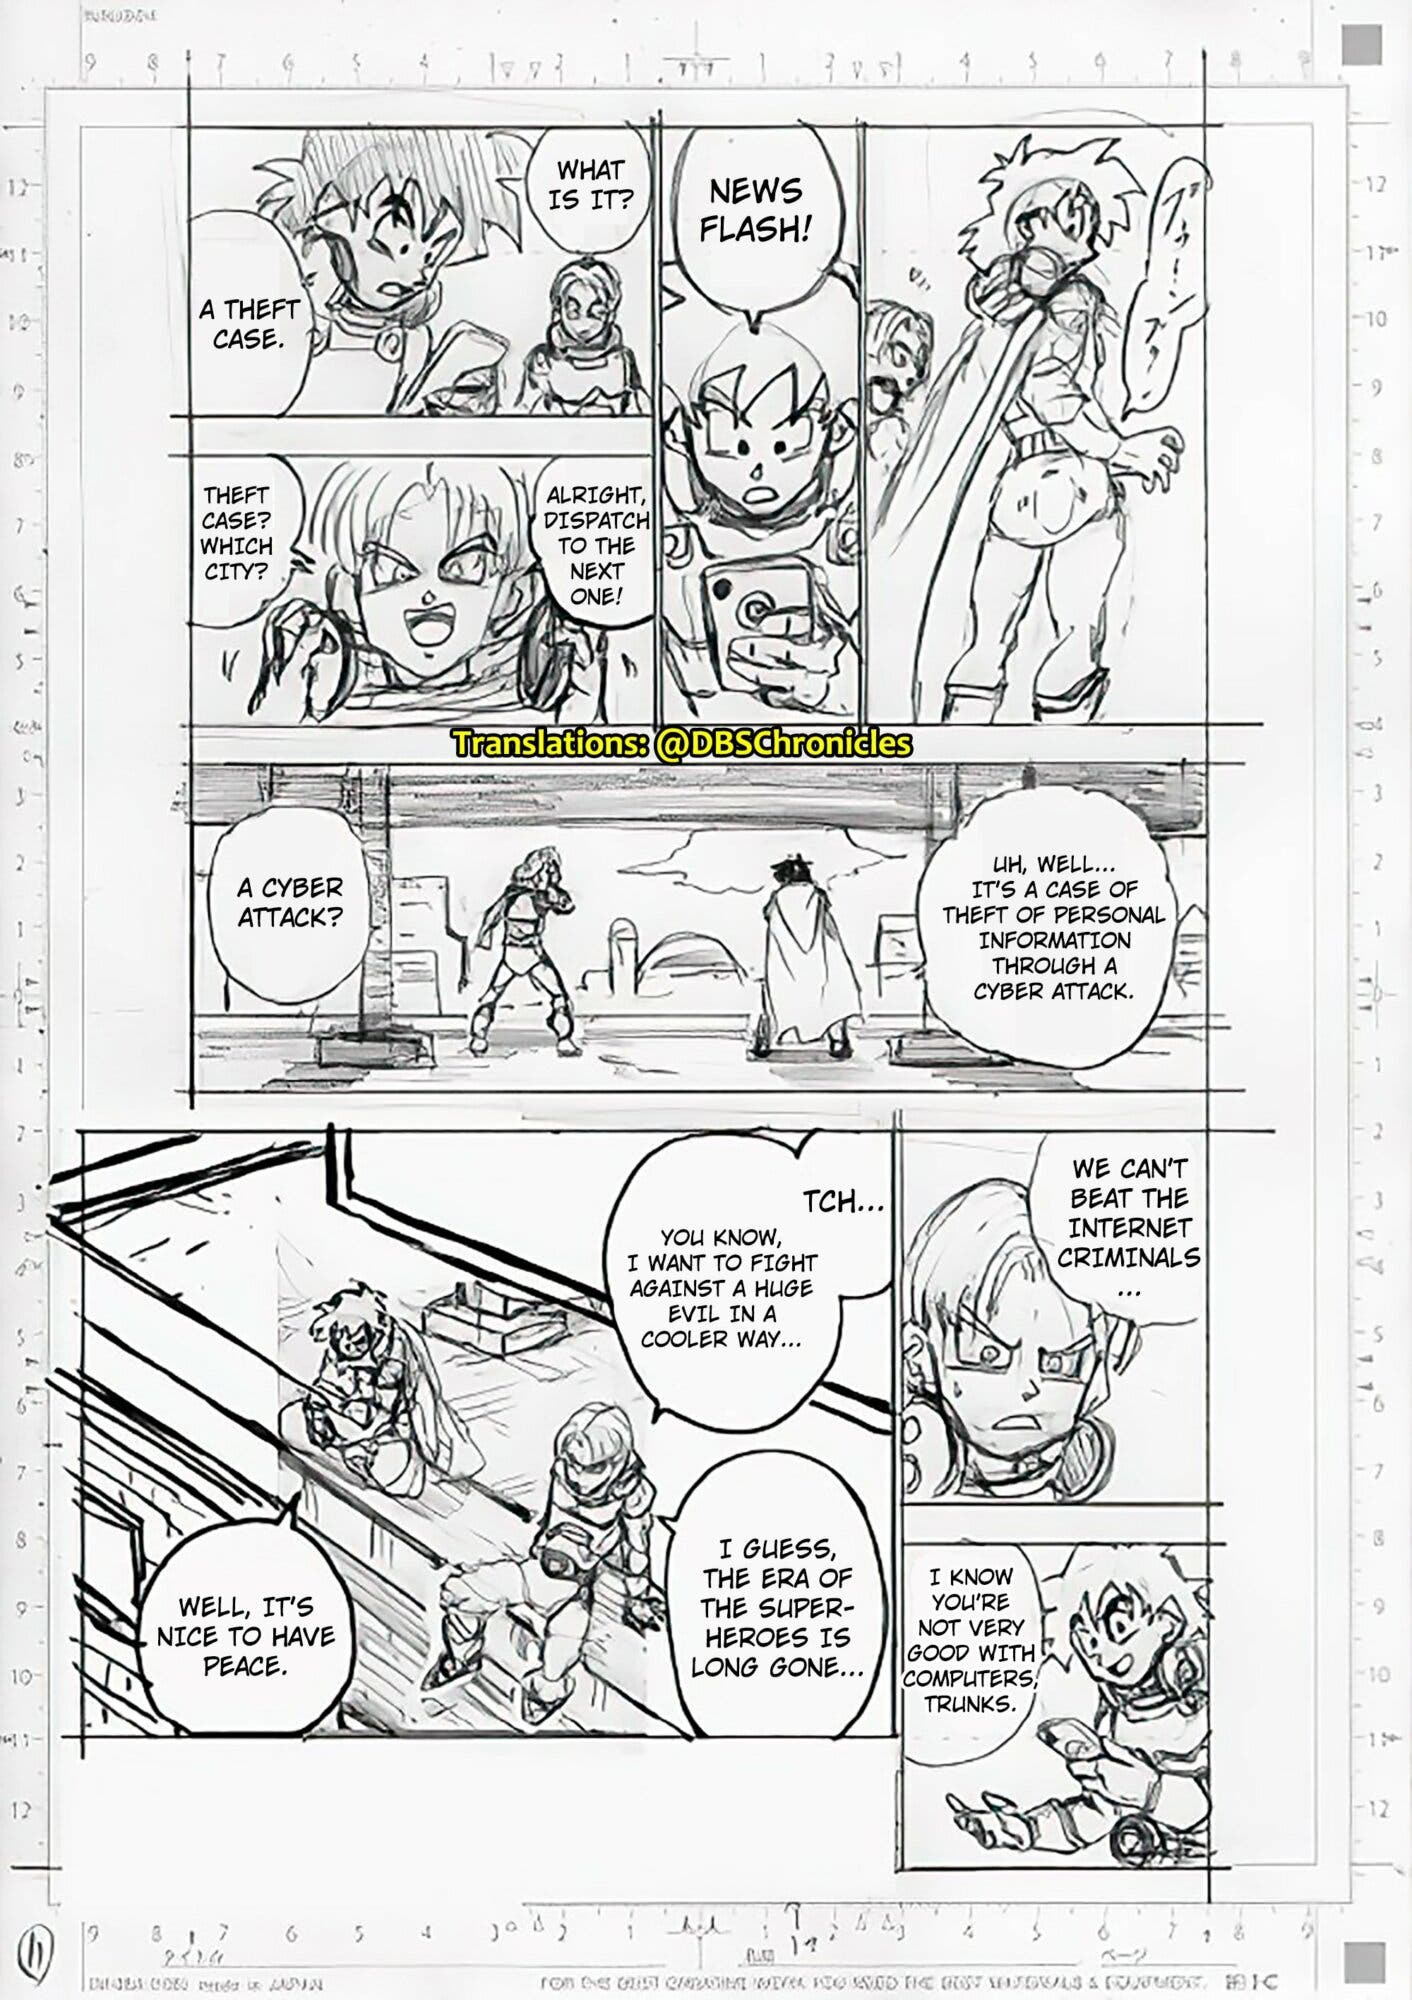 Dragon Ball Super 88: Trunks y Goten como 'Gran Saiyaman